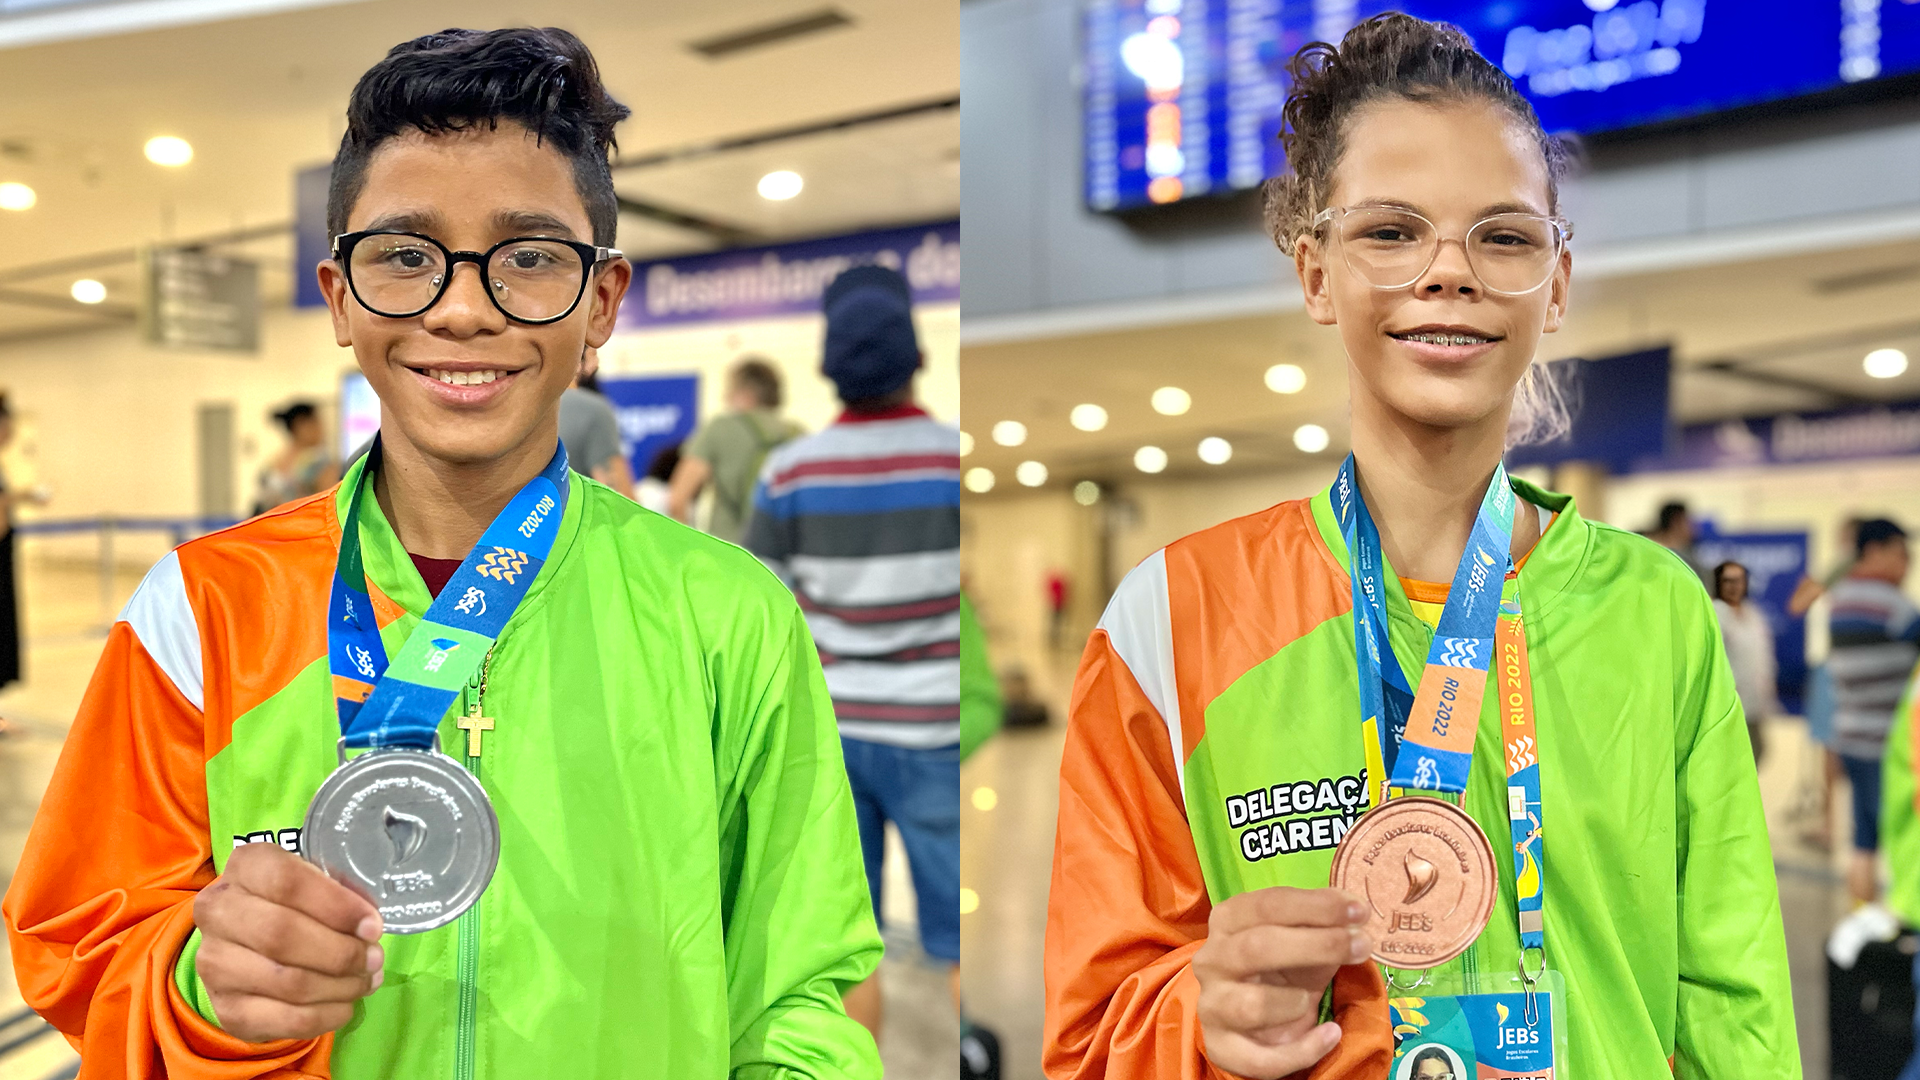 À esquerda, Marlon Gomes, medalhista de prata. À direita, Maria Clara Gomes, medalhista de bronze. | Foto: Nicolas Nobre/IAR